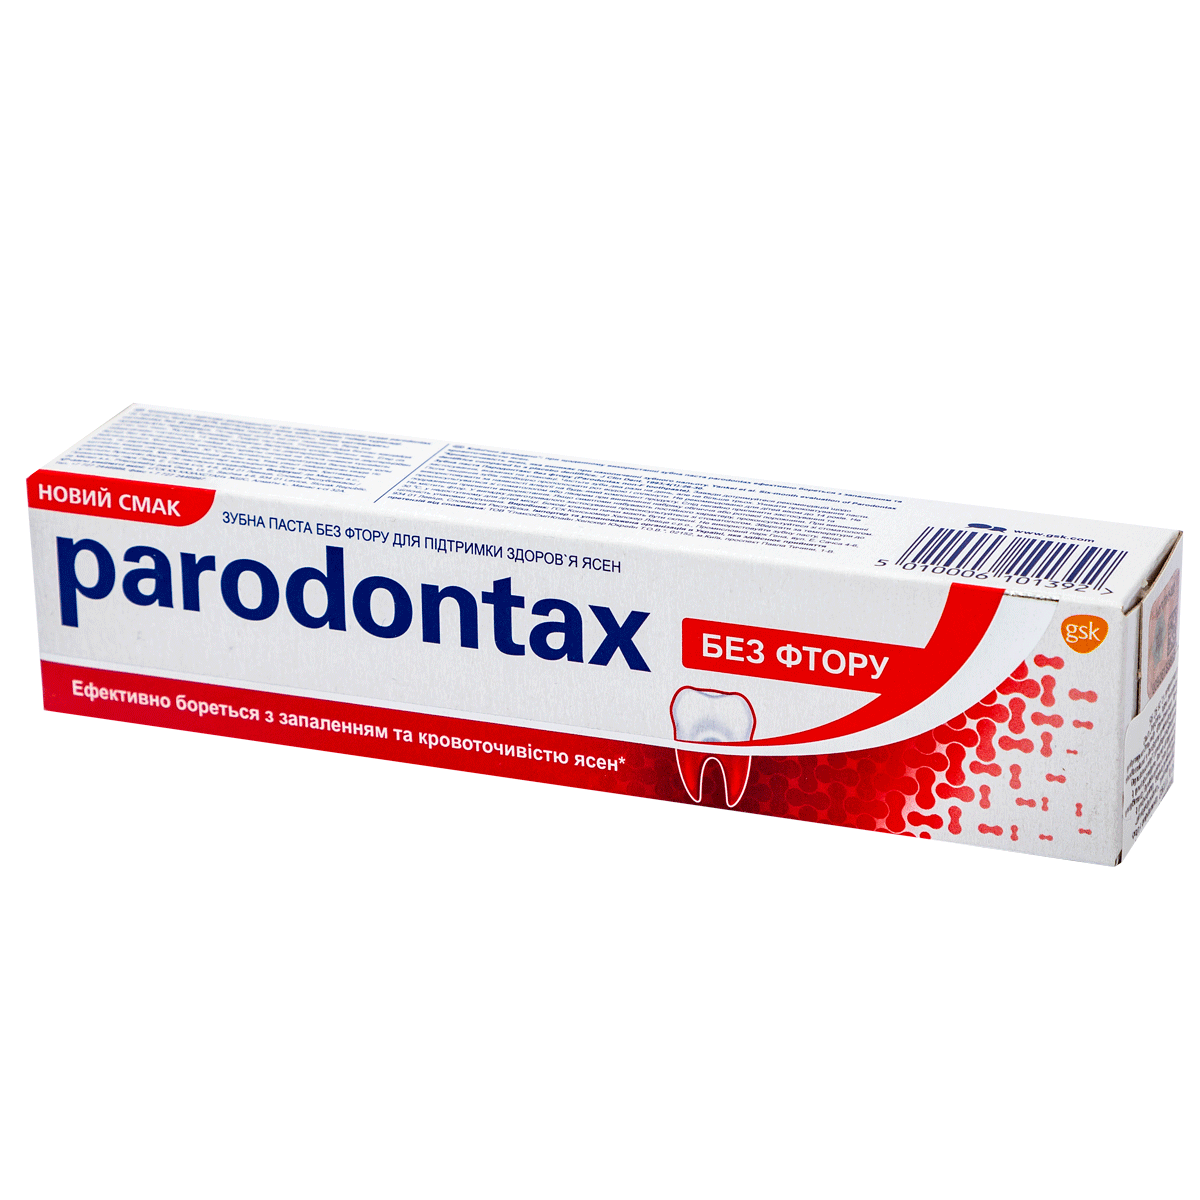 Ատամի մածուկ parodontax 